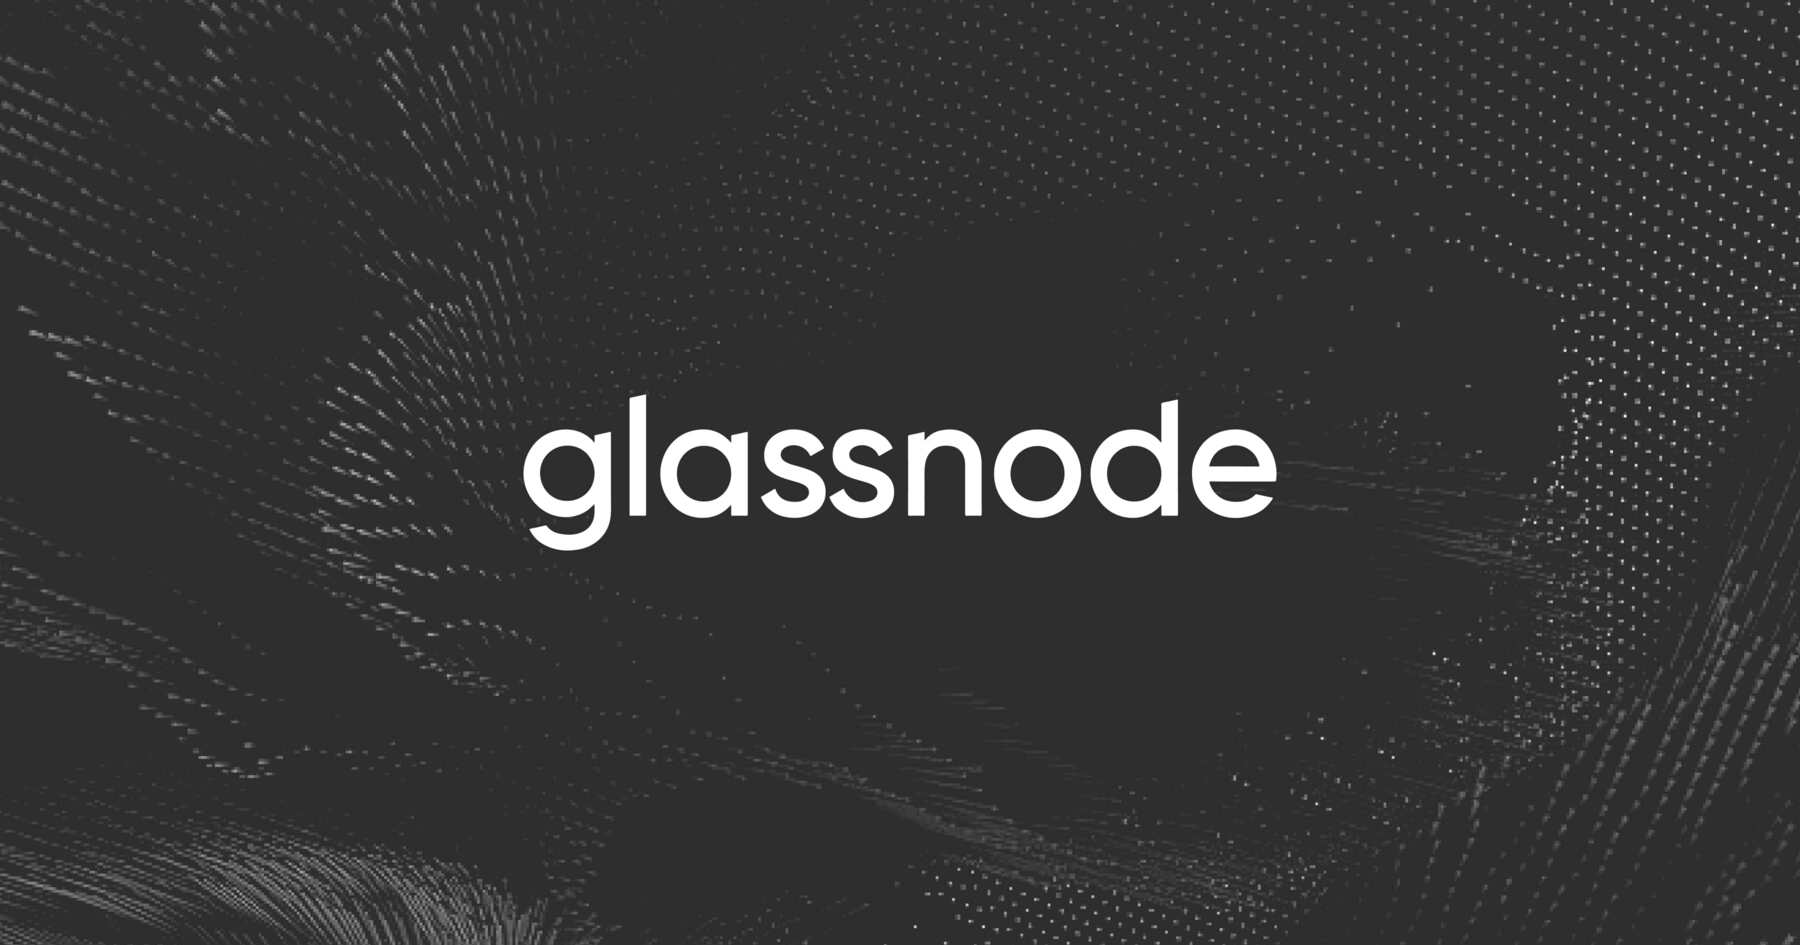 Glassnode Offers Bitcoin Tax Software to Blockpit